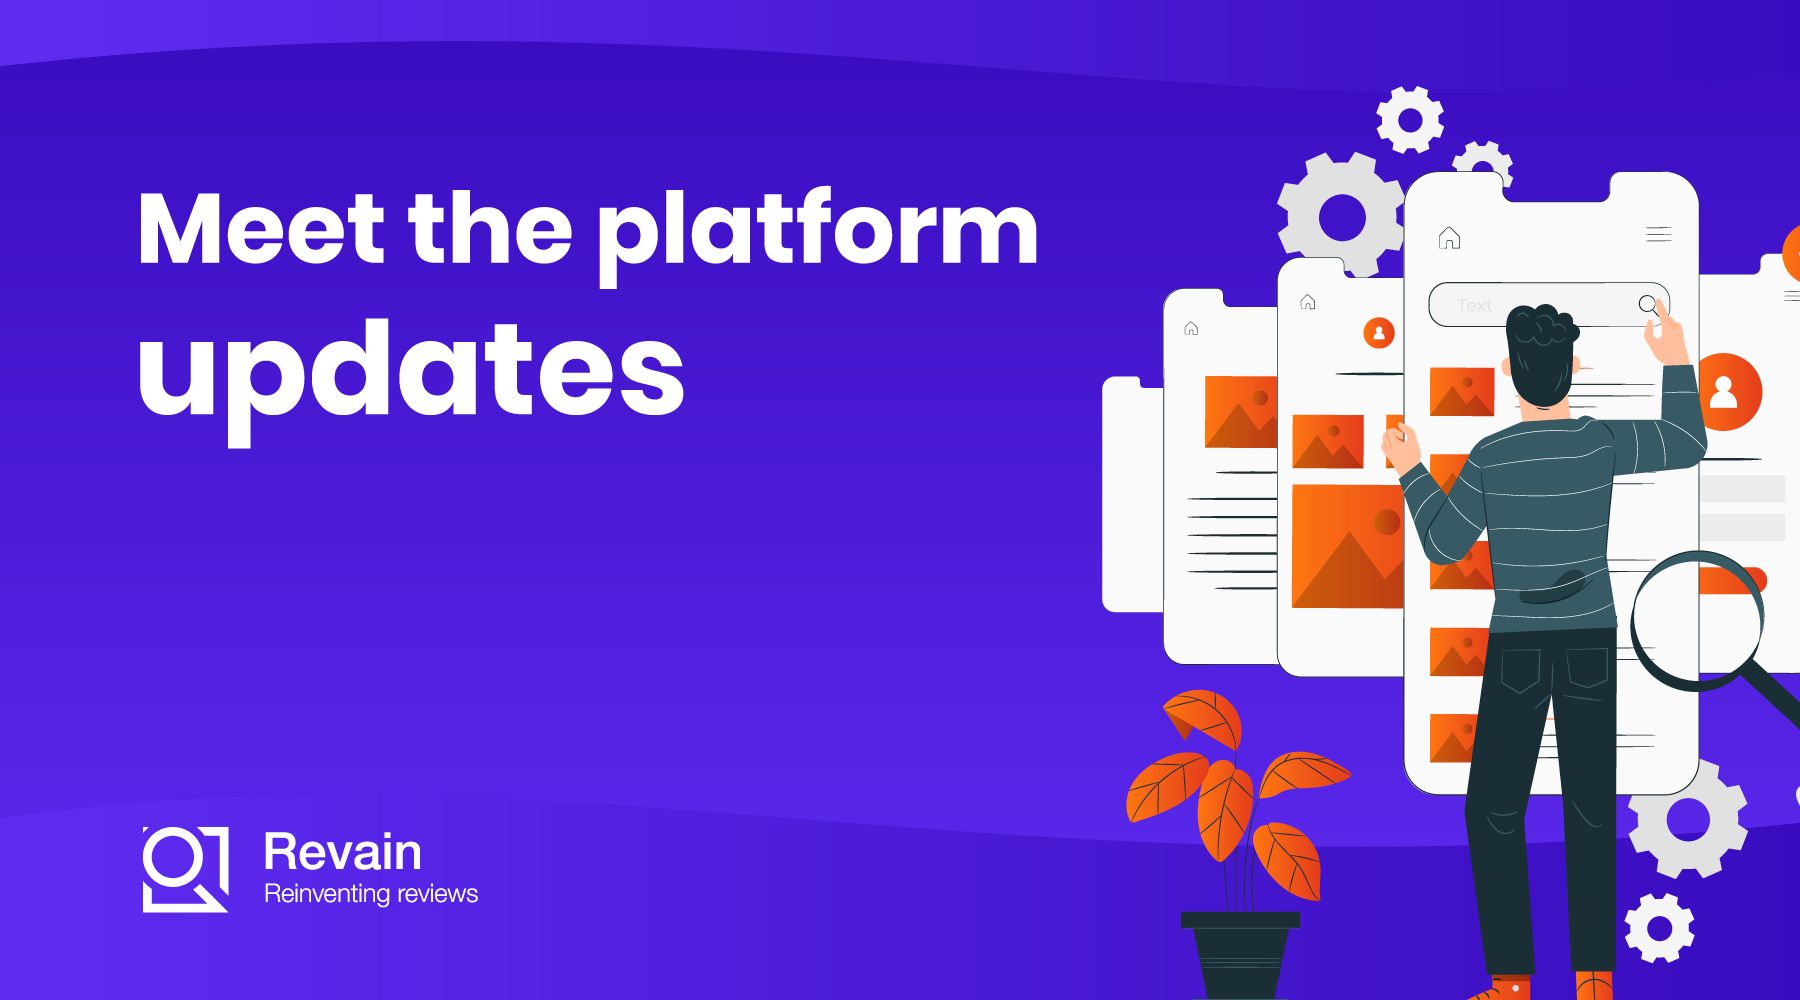 Meet the platform updates!